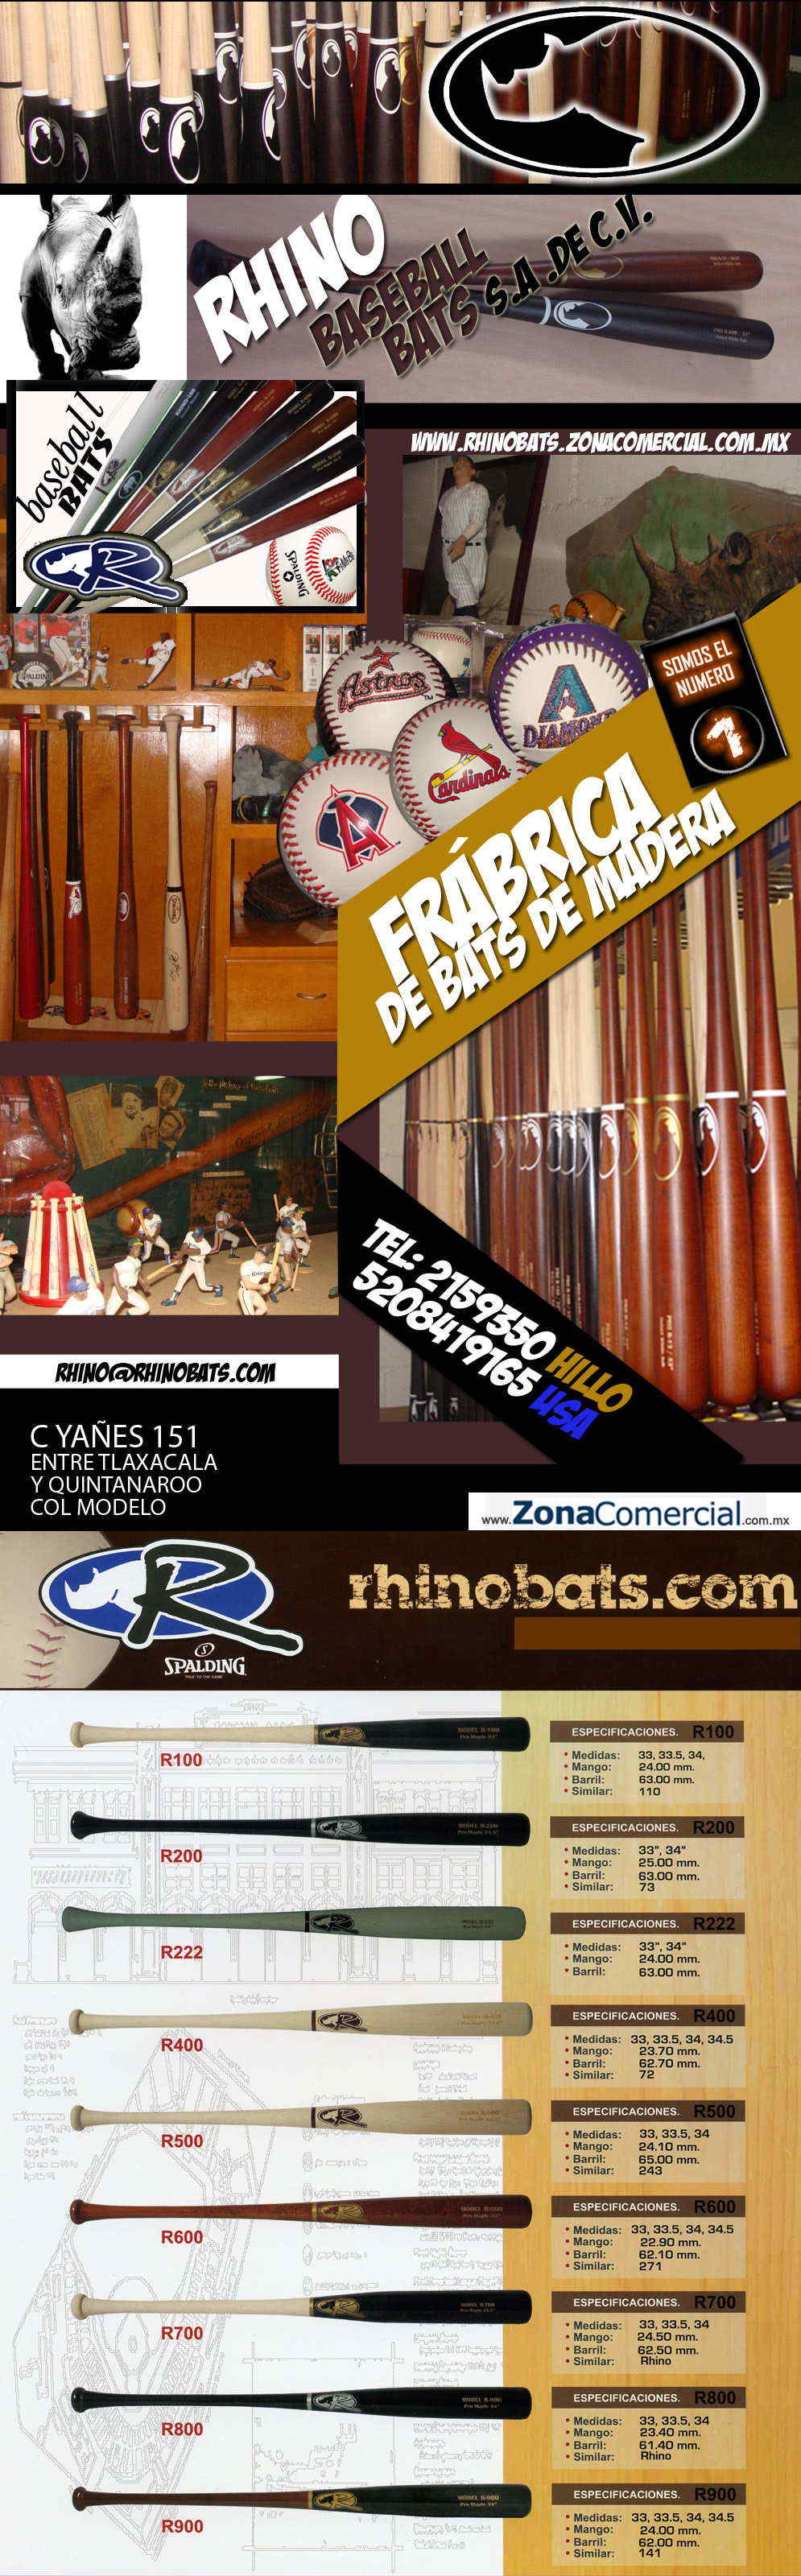 RHINO BASEBALL BATS SA D CV-frabrica de bats de madera             